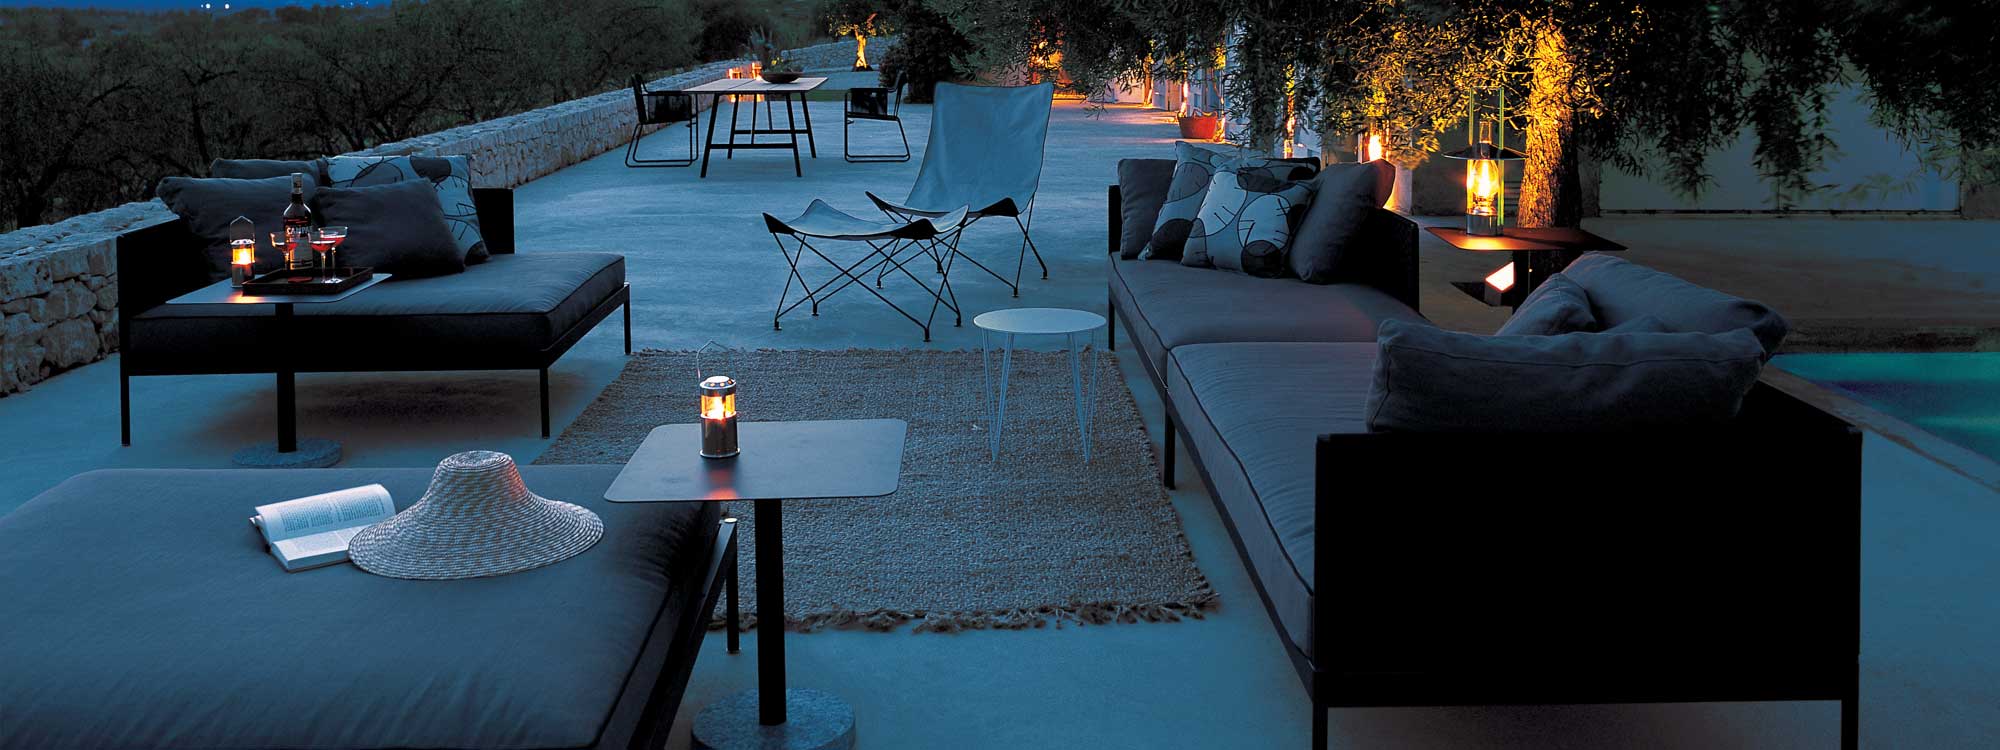 Basket modern garden sofa is a modular outdoor lounge set in high quality outdoor sofa materials by RODA luxury Italian garden furniture Co.